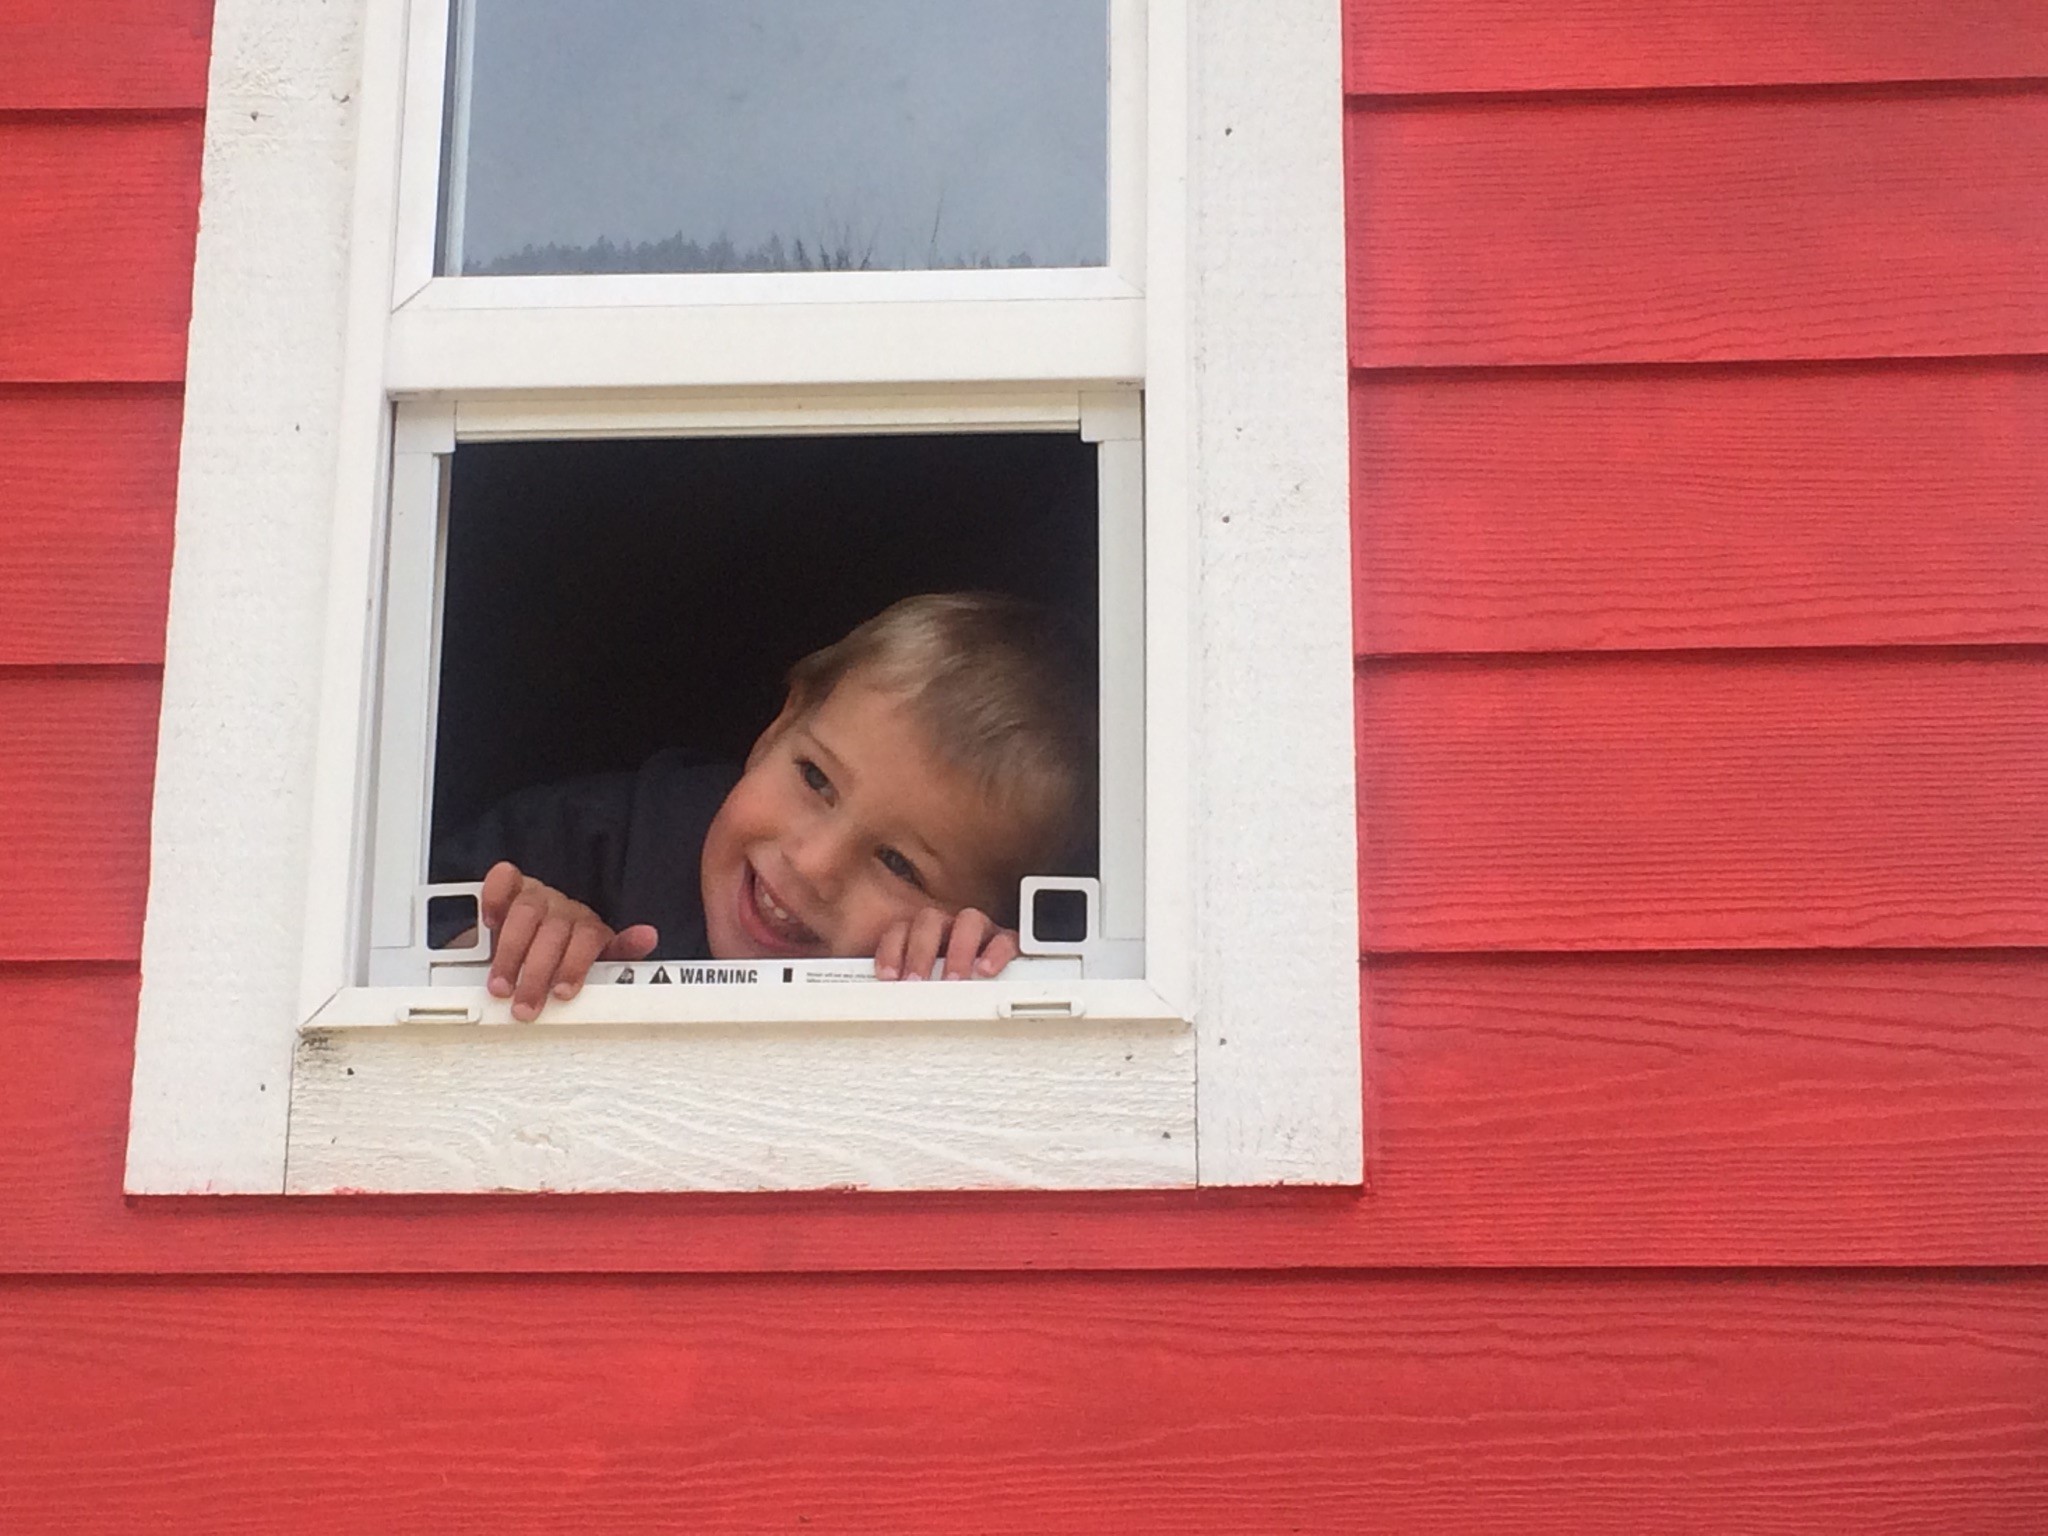 Child in window